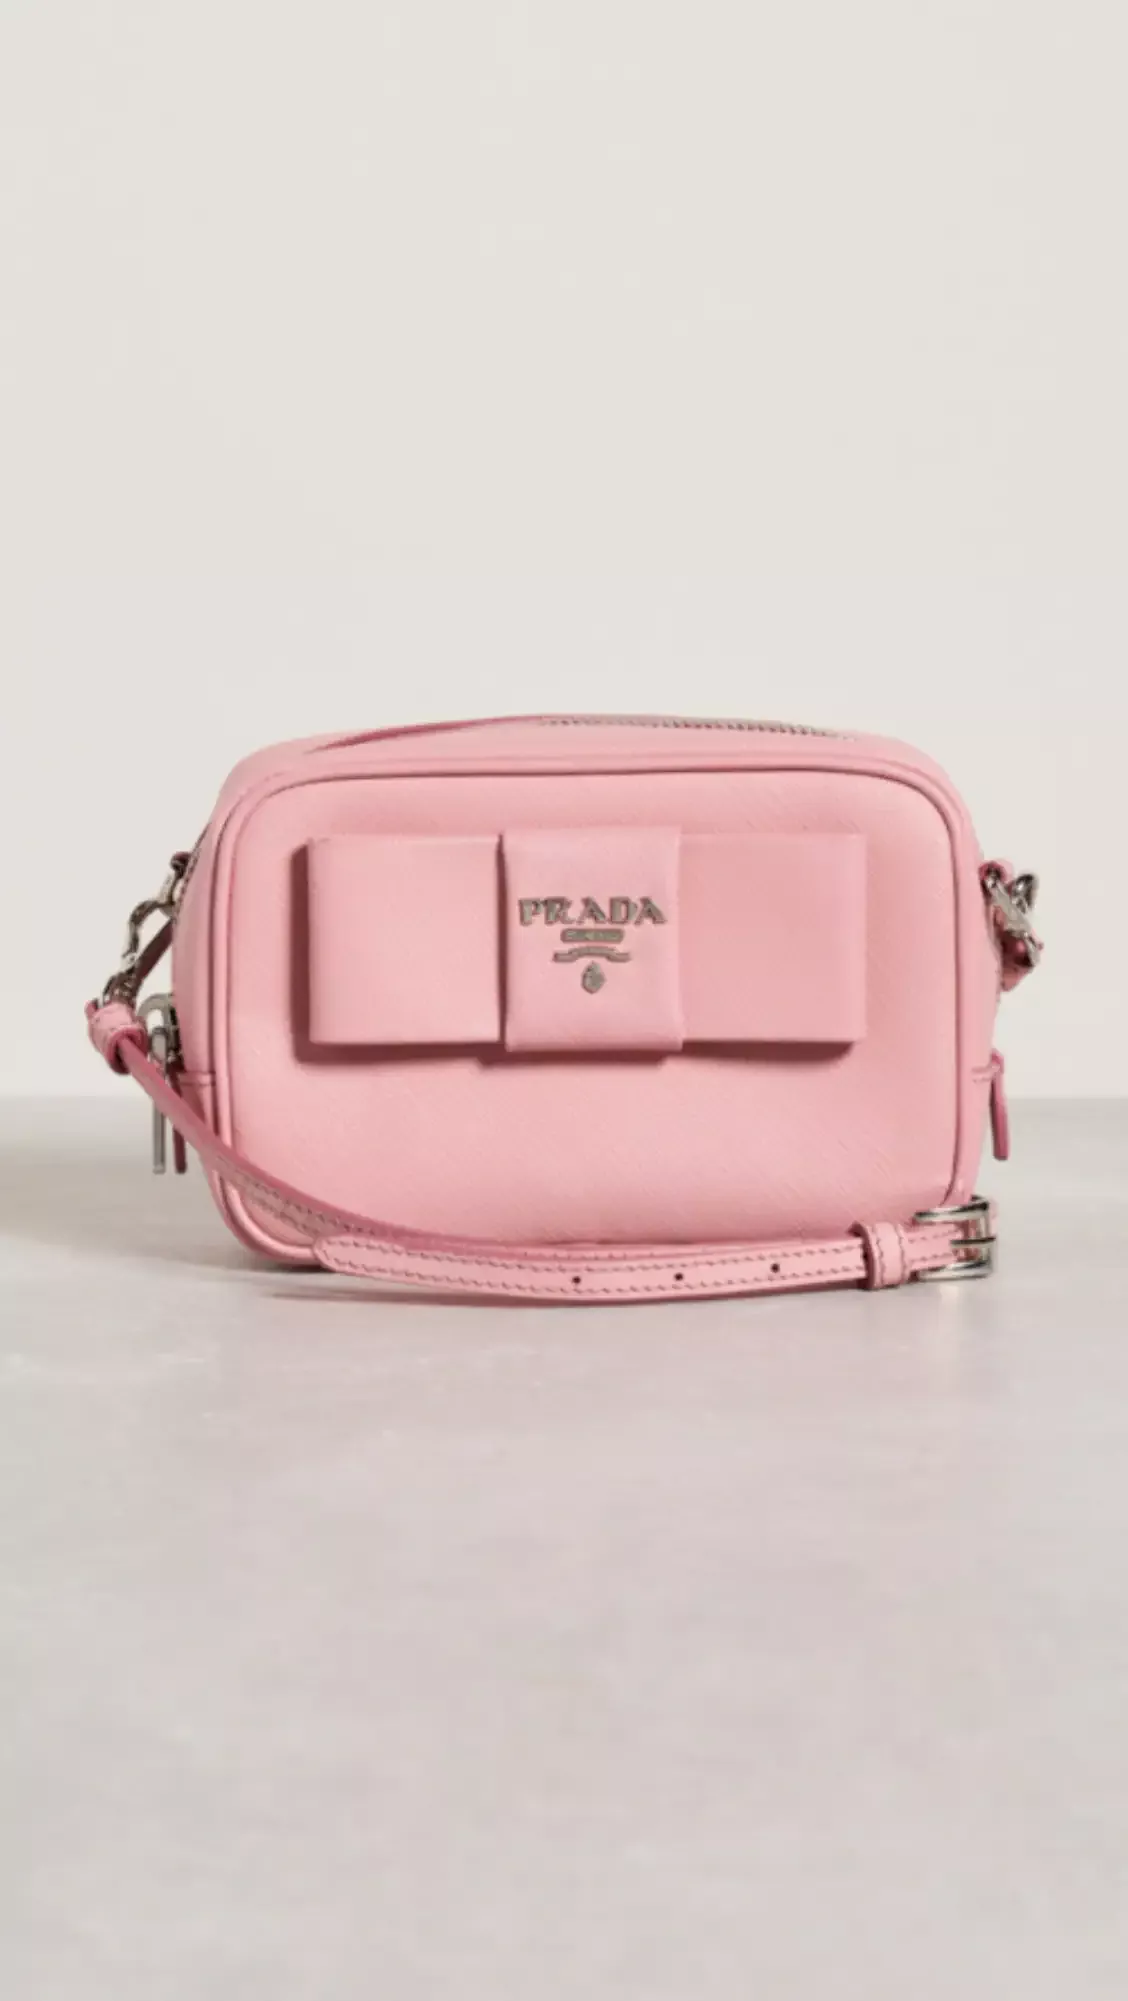 Prada Light Pink Saffiano Leather Mini Camera Crossbody Bag at